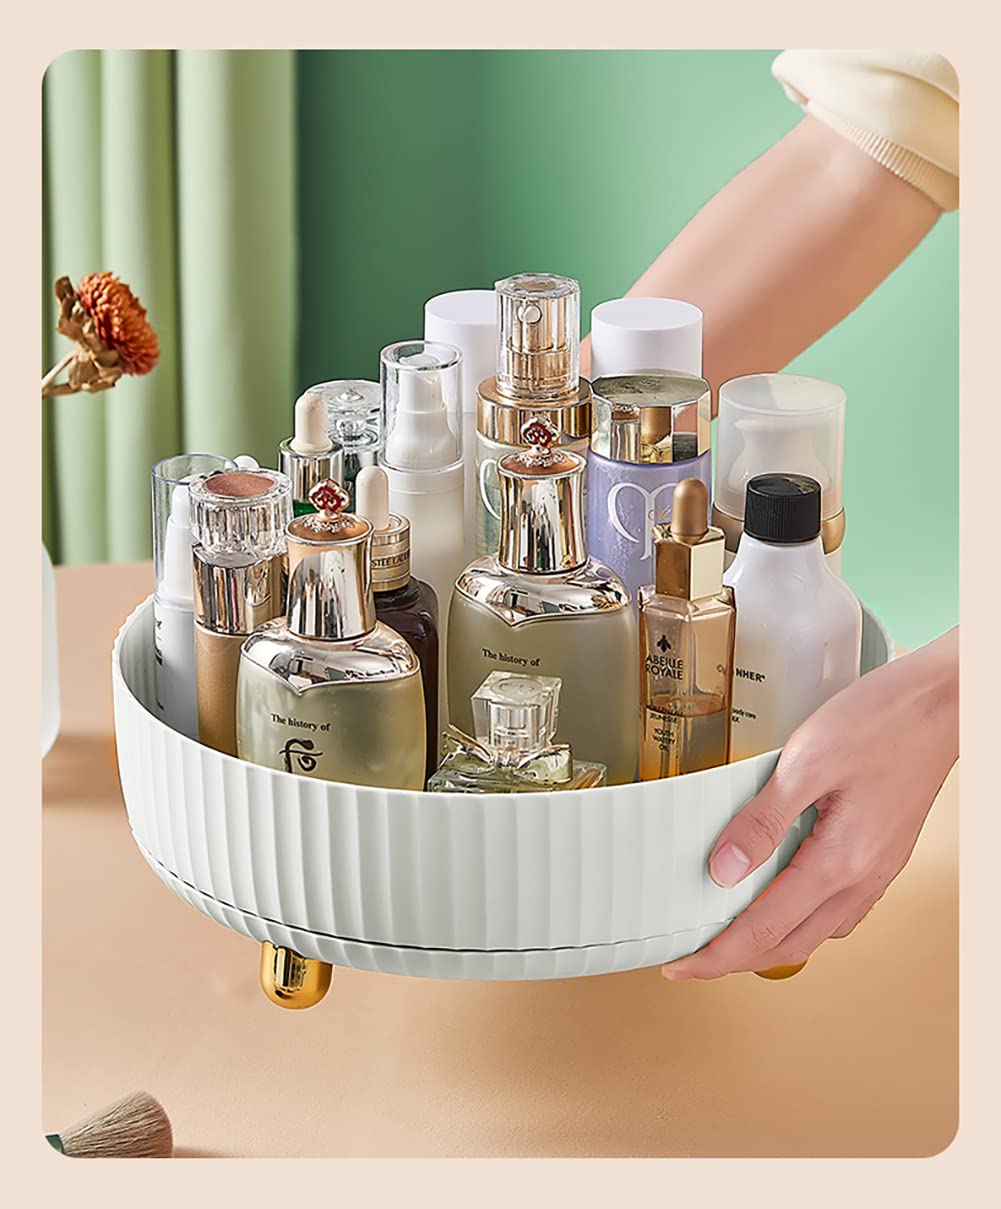 ICCGBHGO Makeup Organizer, 360 Degree Rotating Lazy Susan Perfume Lotion Cosmetic Skincare Organizer Storage Display Tray for Vanity Dresser Bathroom Countertop(White)